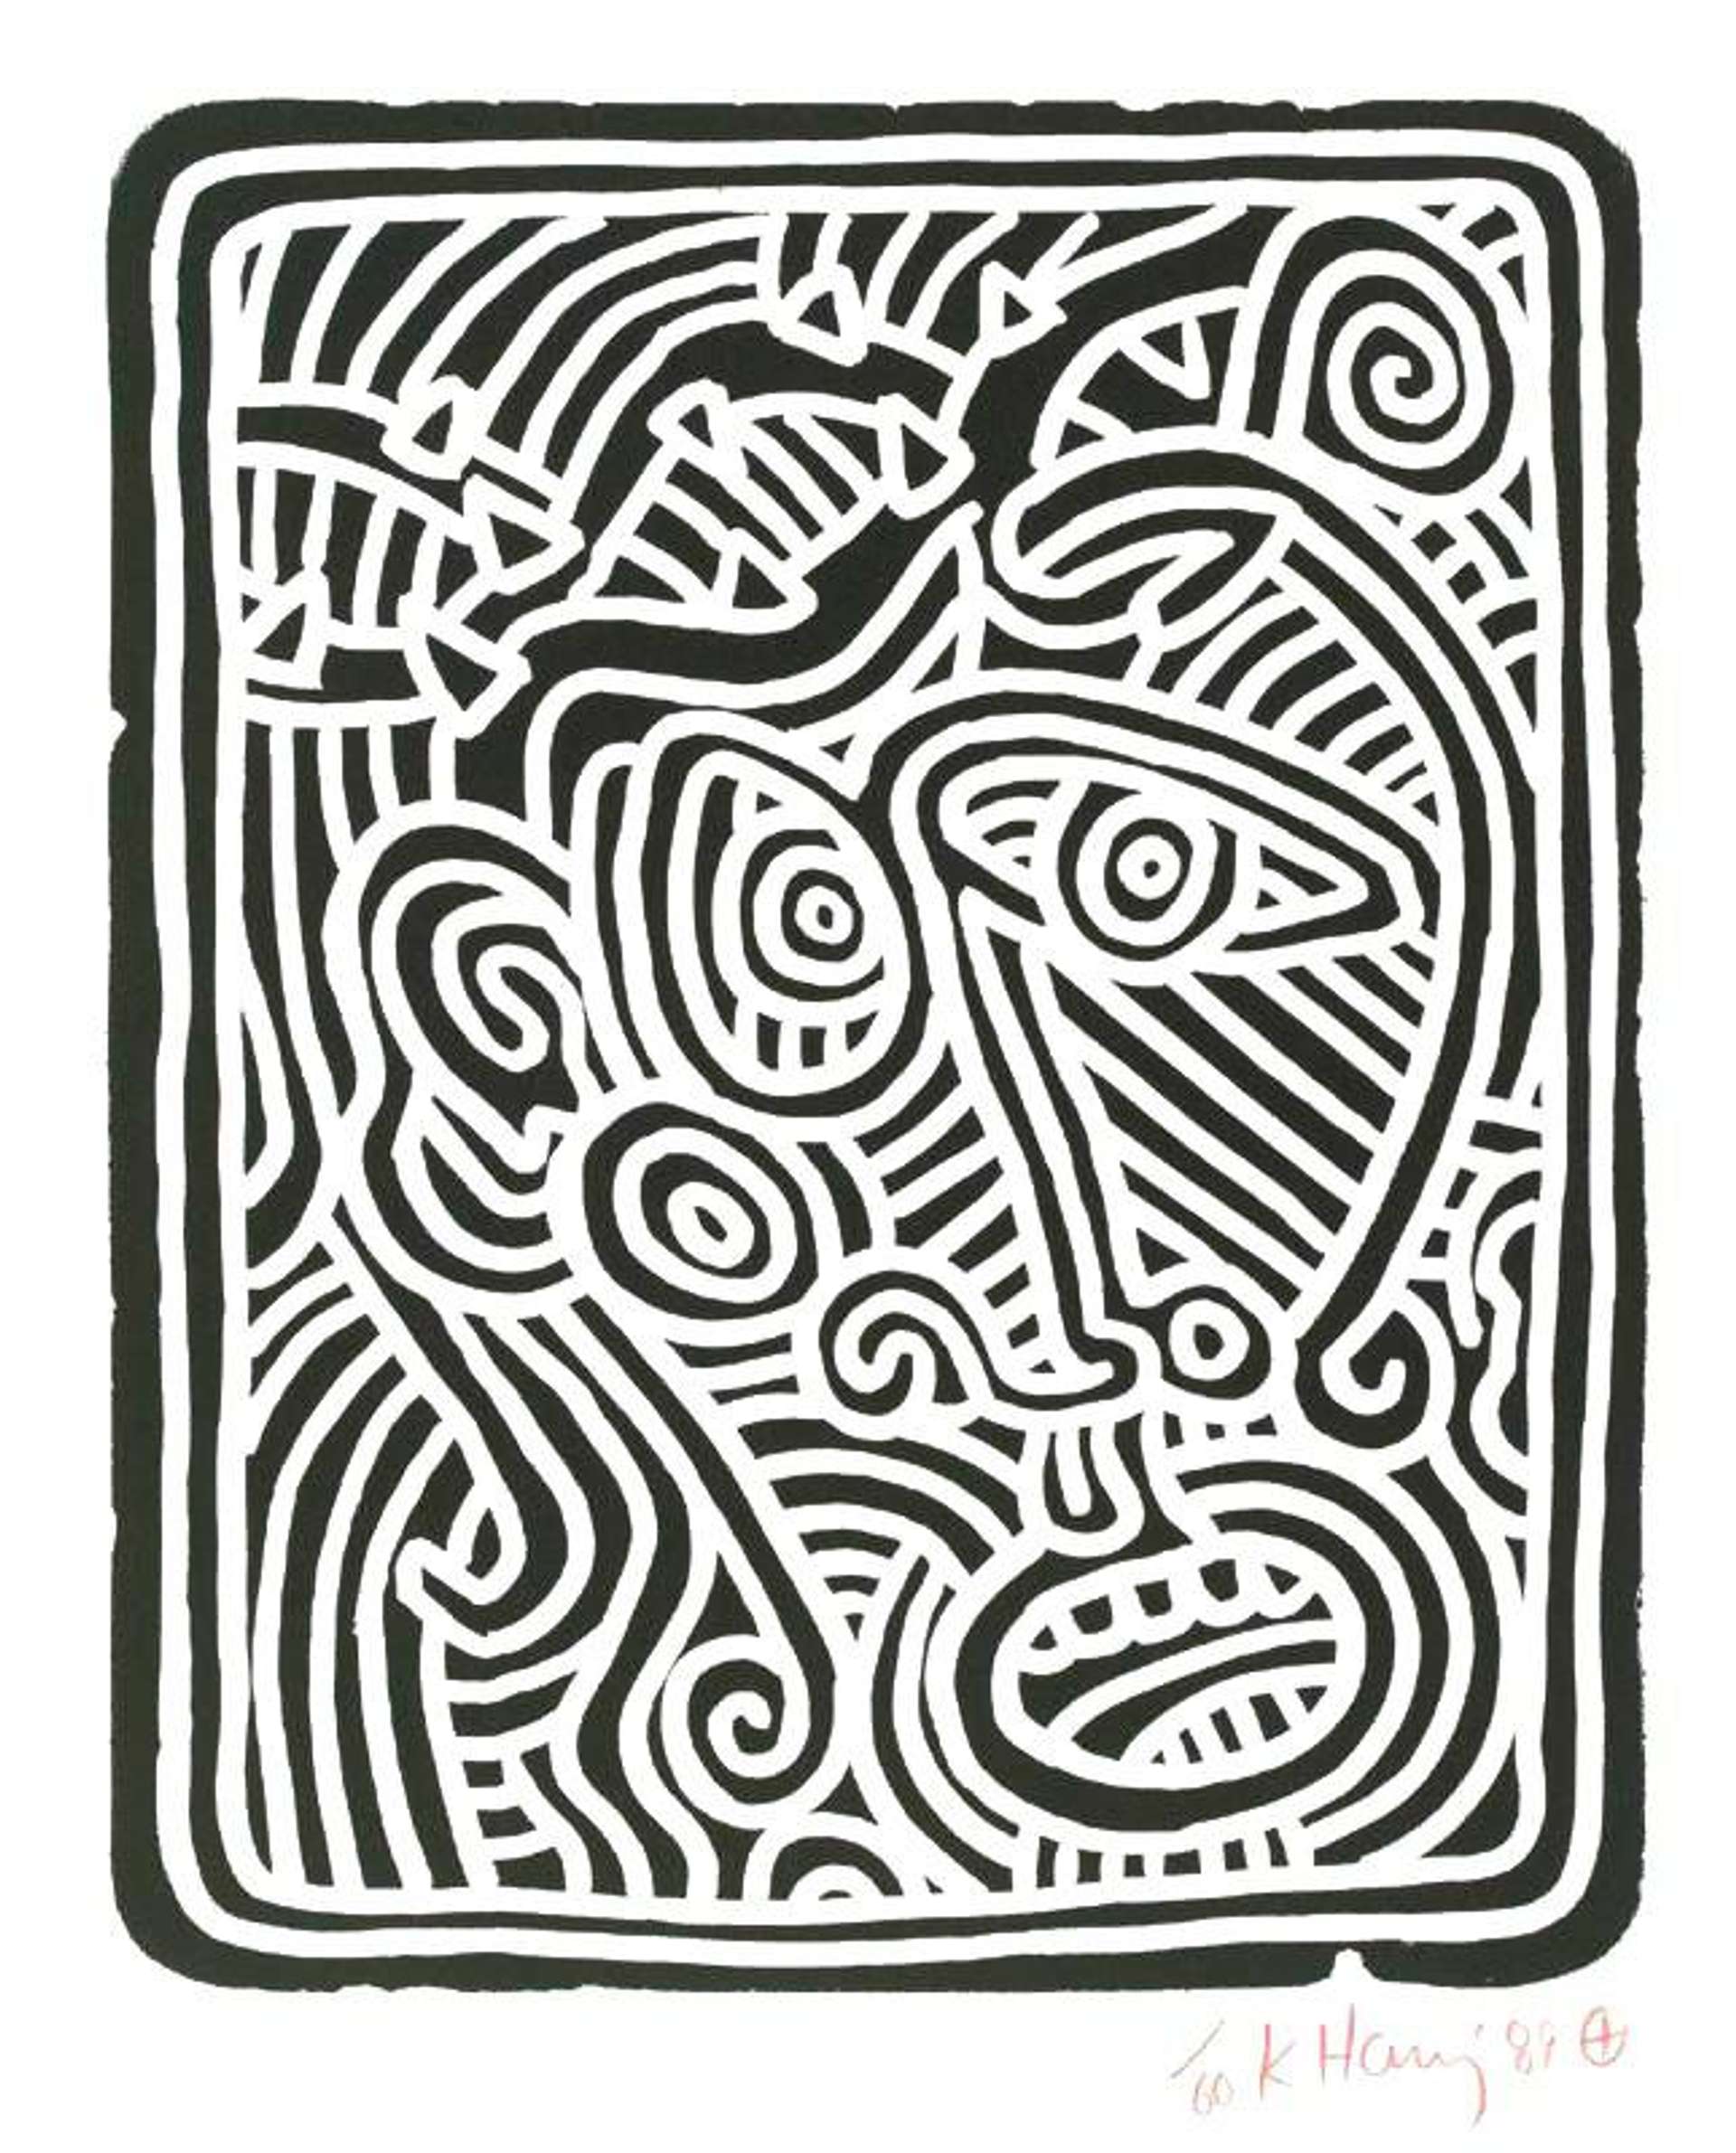 Stones 1 - Signed Print by Keith Haring 1989 - MyArtBroker